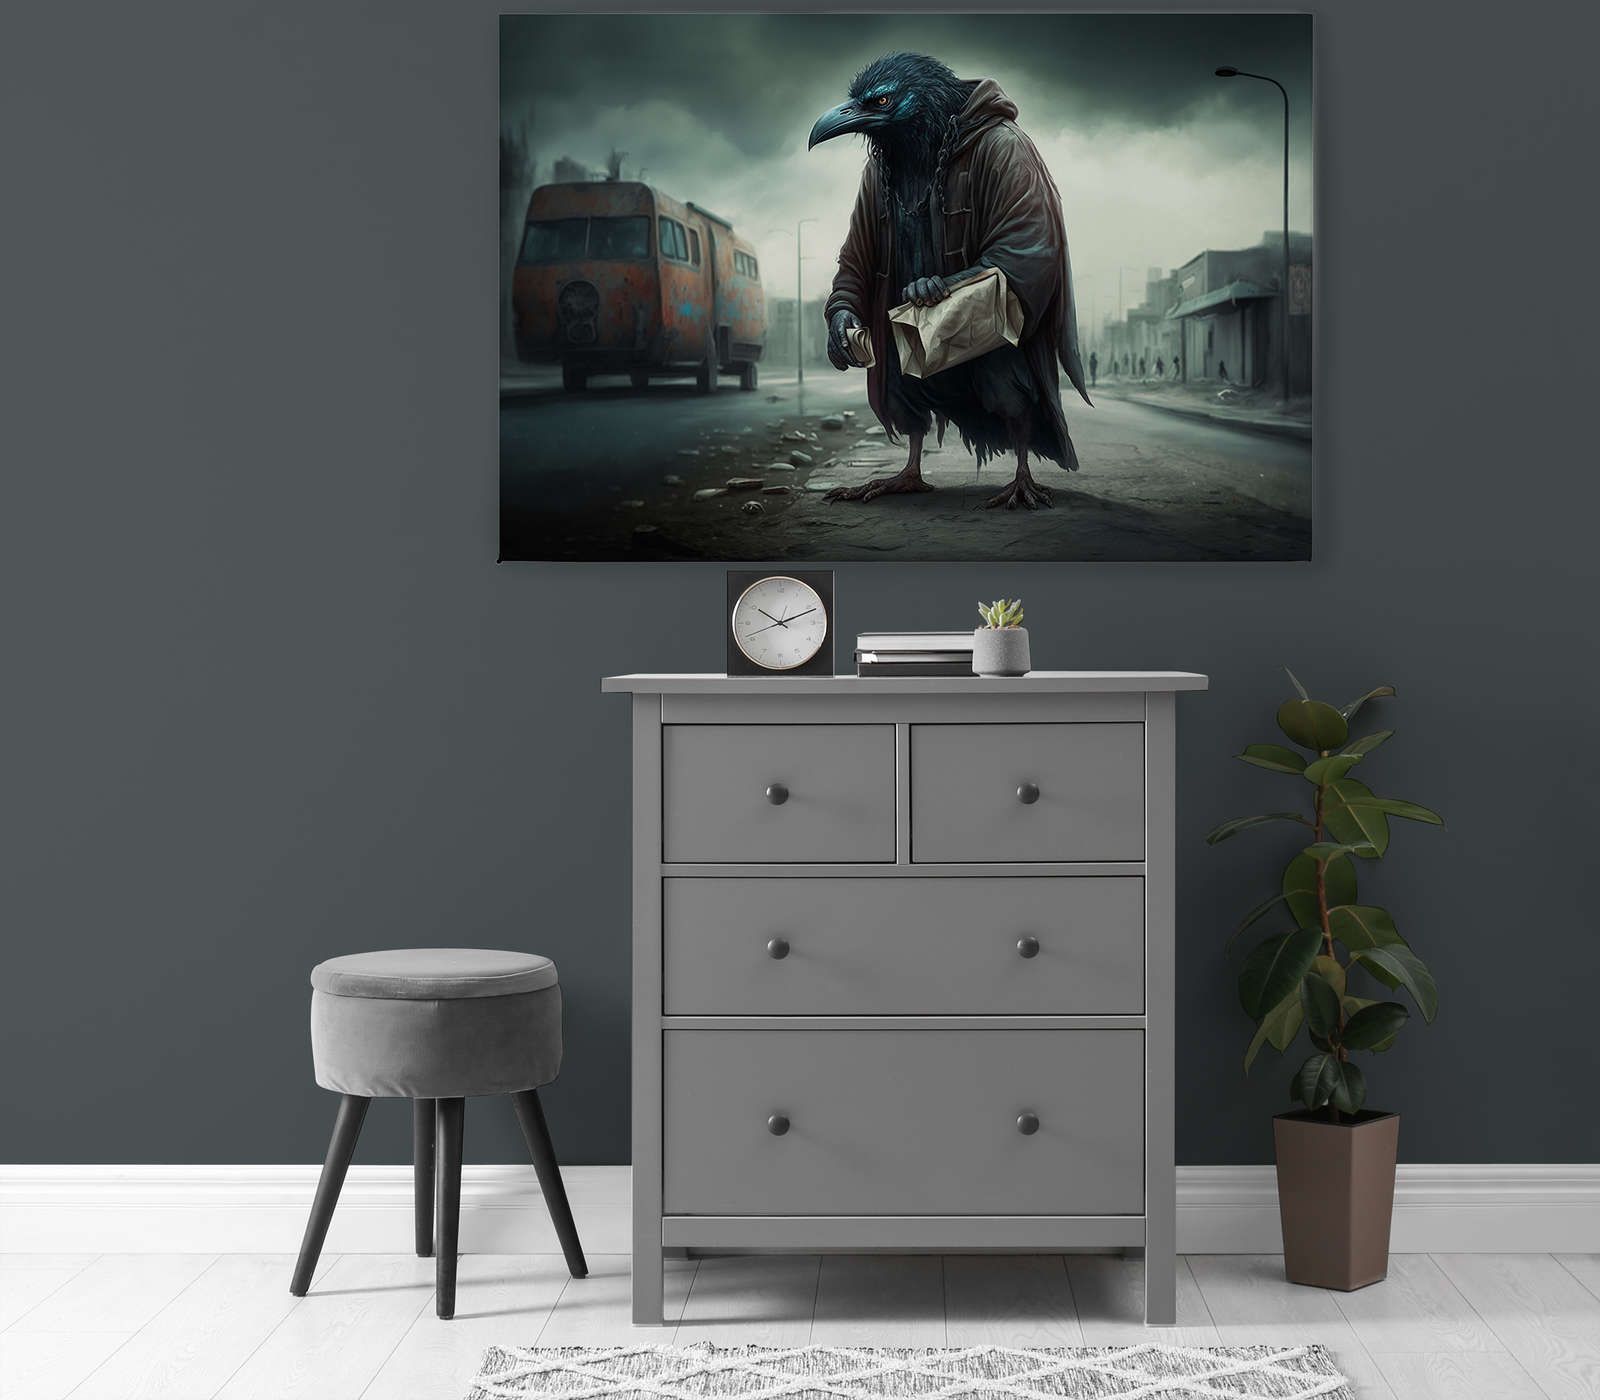             KI Canvas painting »Street Crow« - 120 cm x 80 cm
        